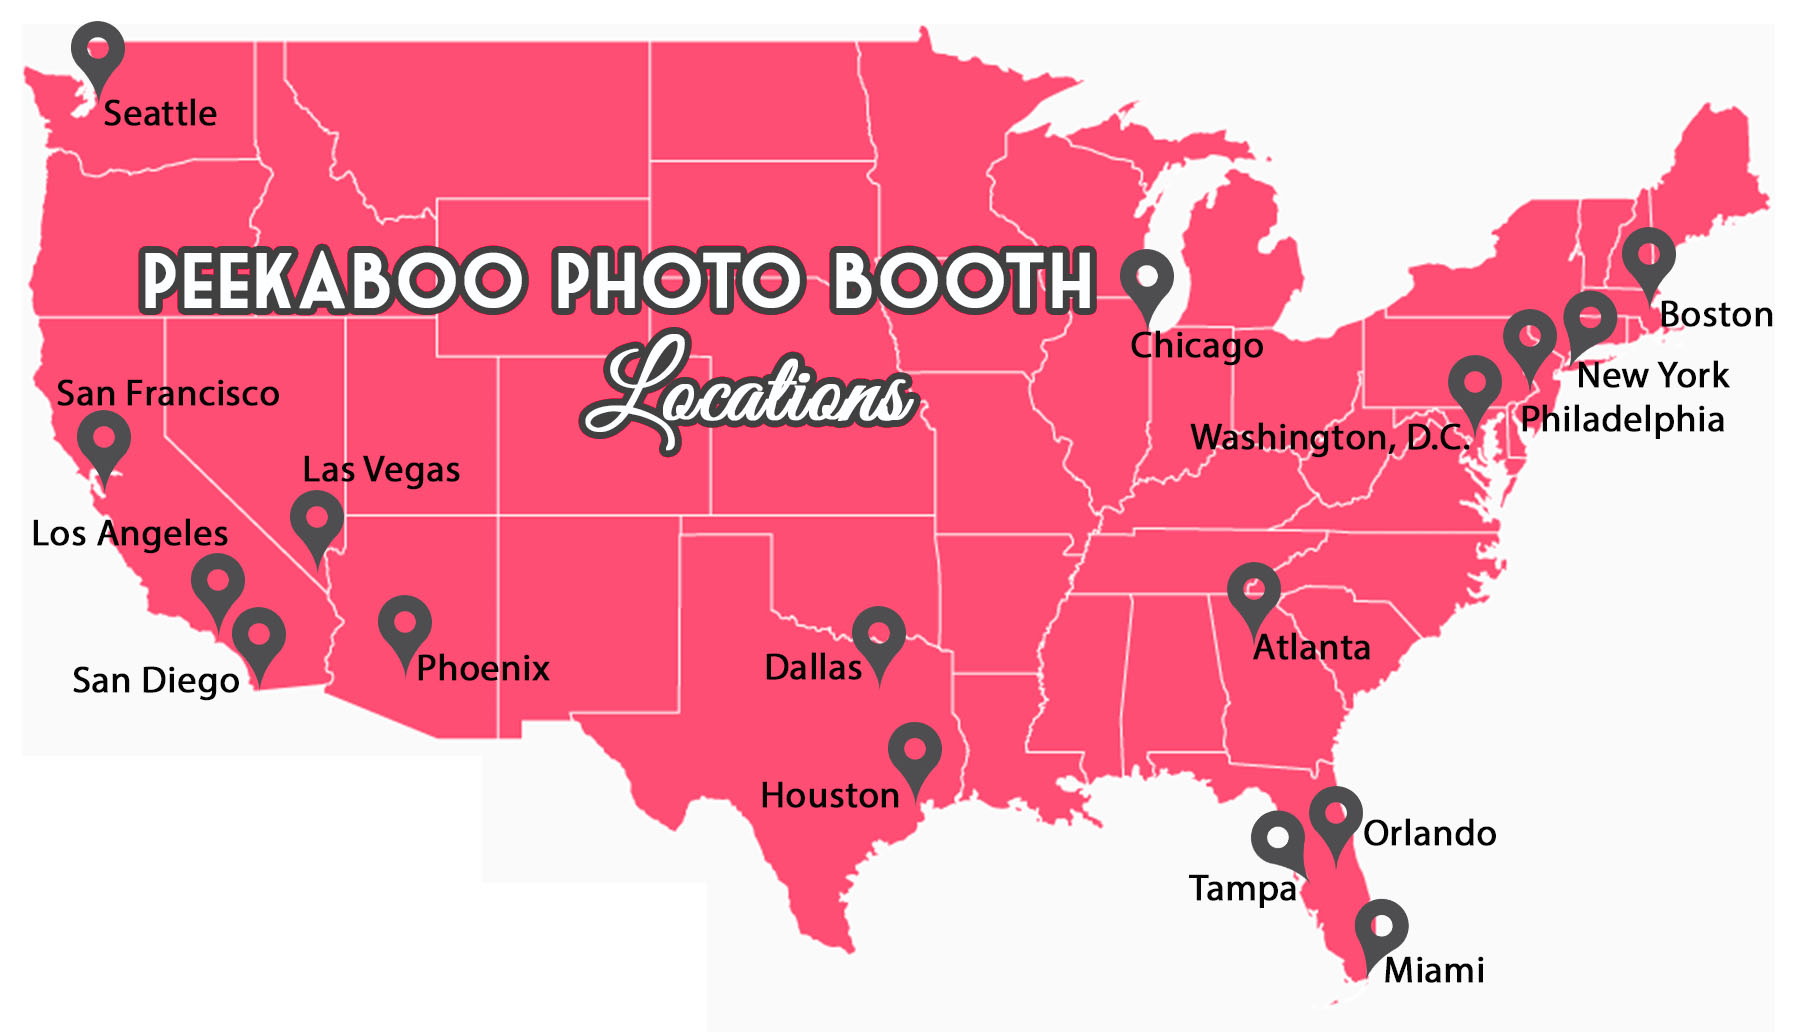 Peekaboo Photo Booth Locations Map